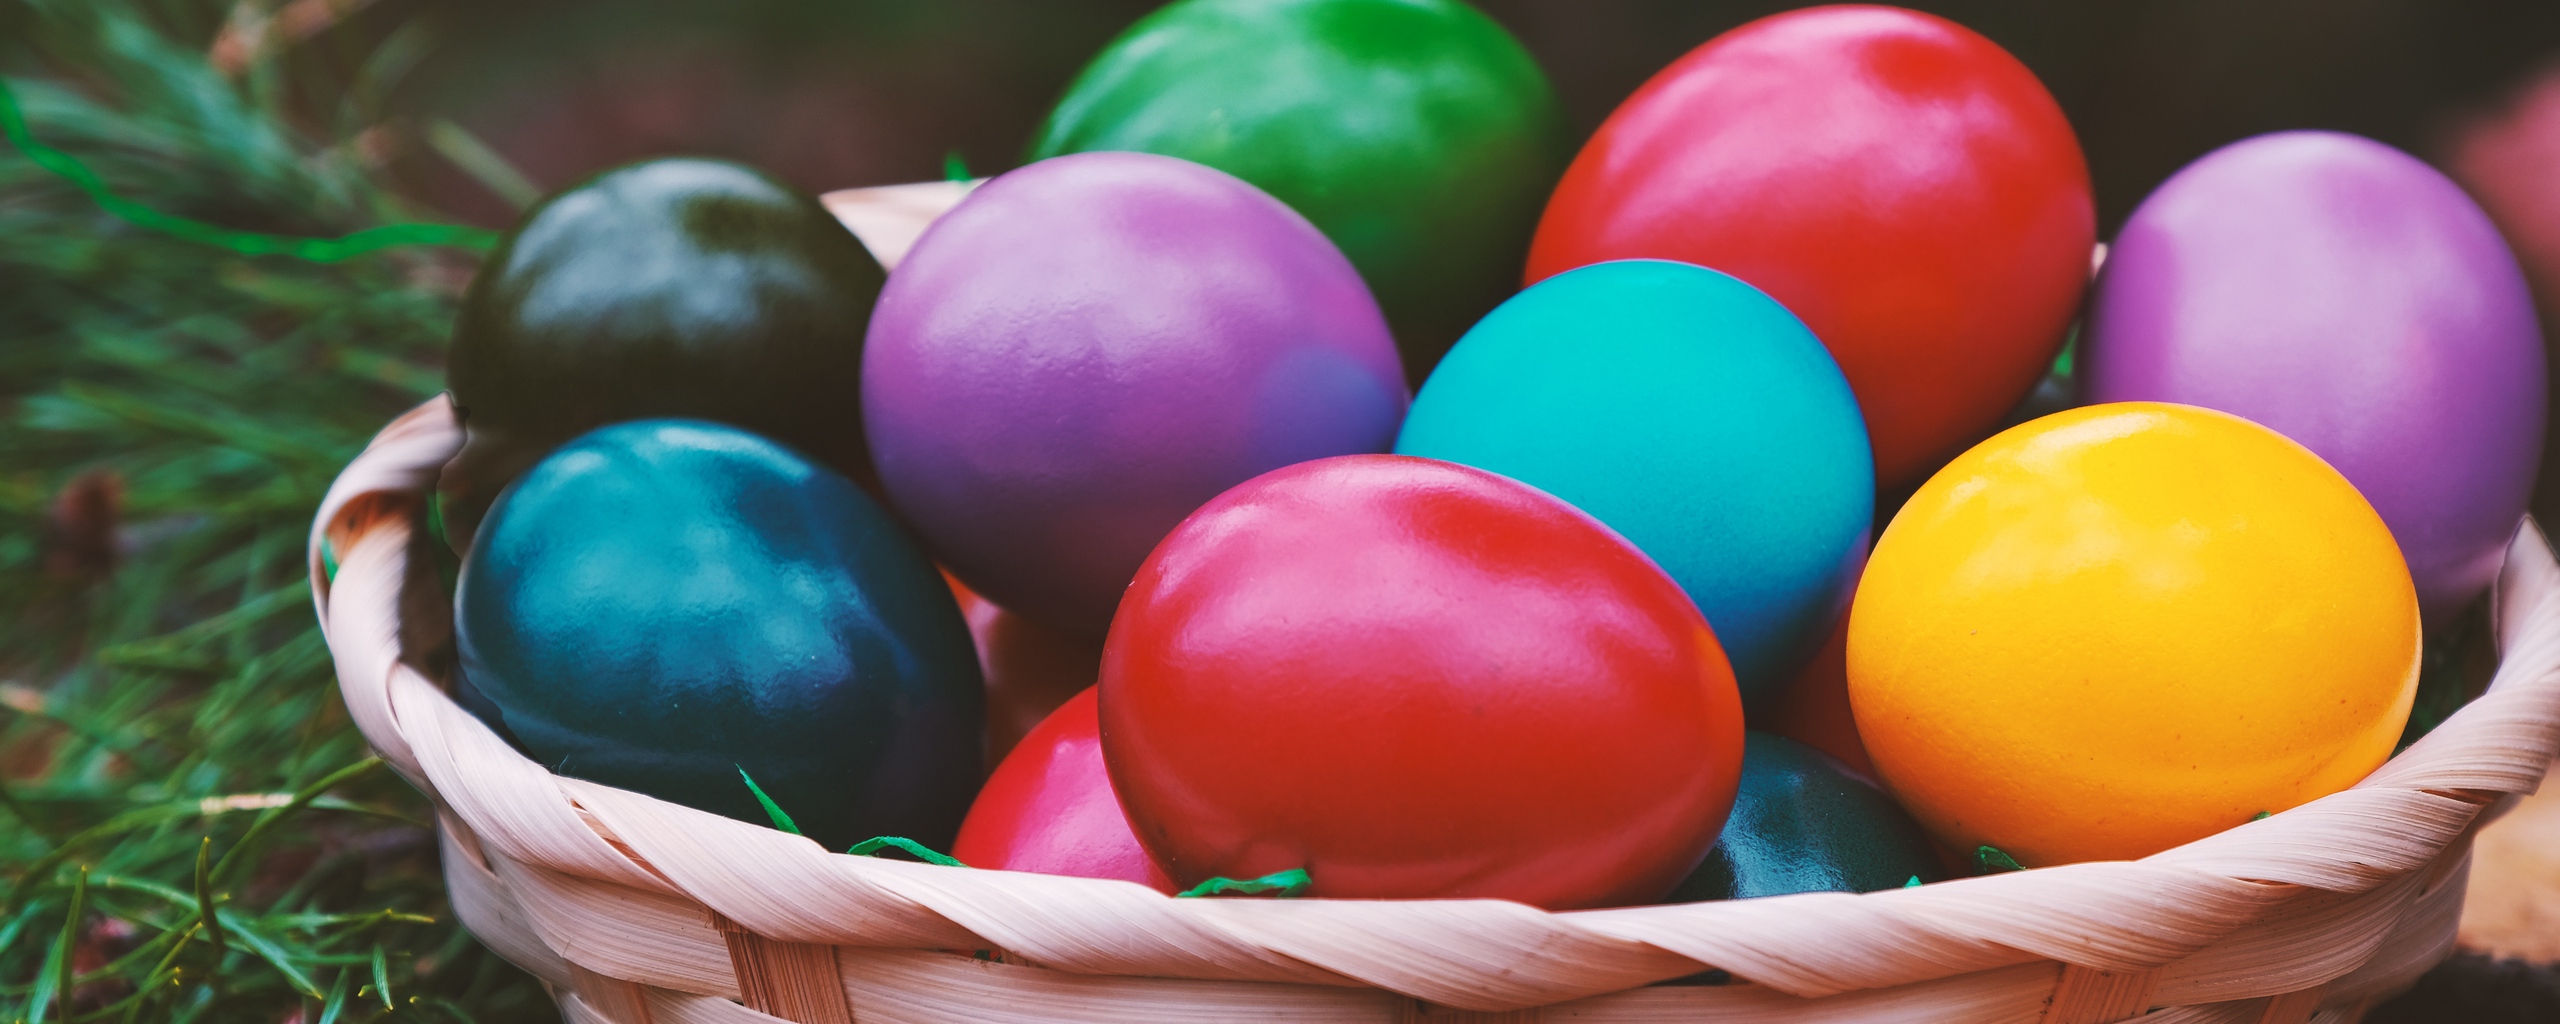 Wallpaper Easter, Eggs, Colorful, Basket - Buona Pasqua - HD Wallpaper 